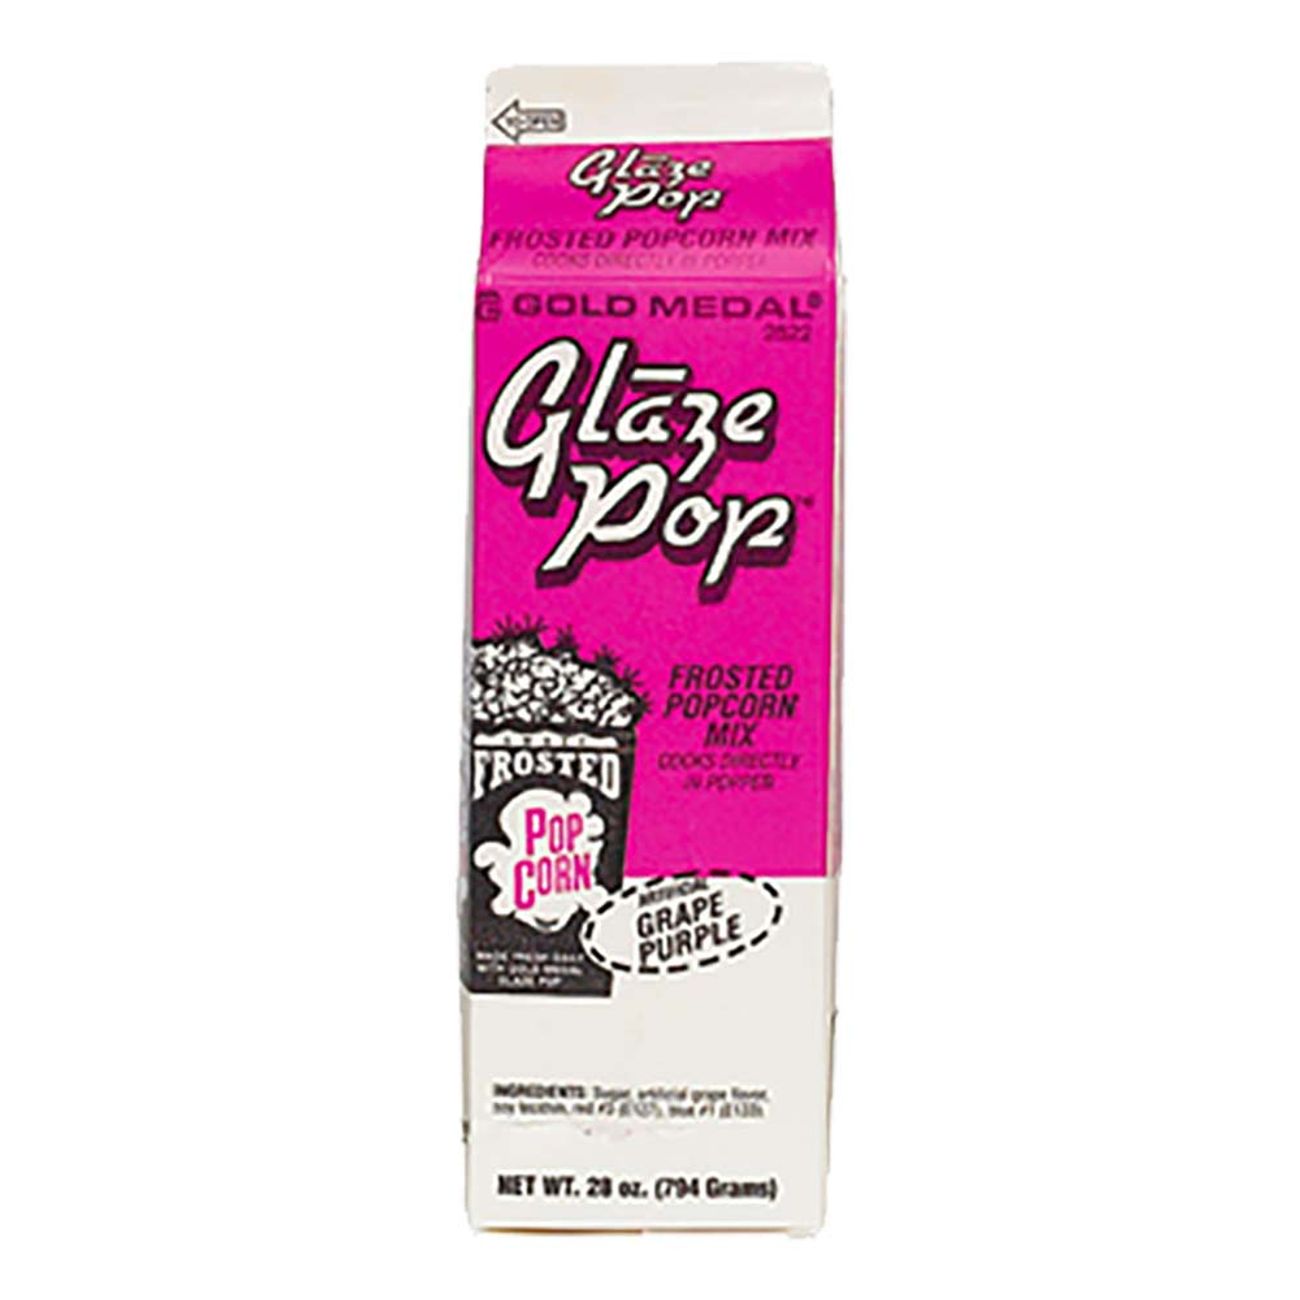 glaze-pop-popcornglaze-96143-5